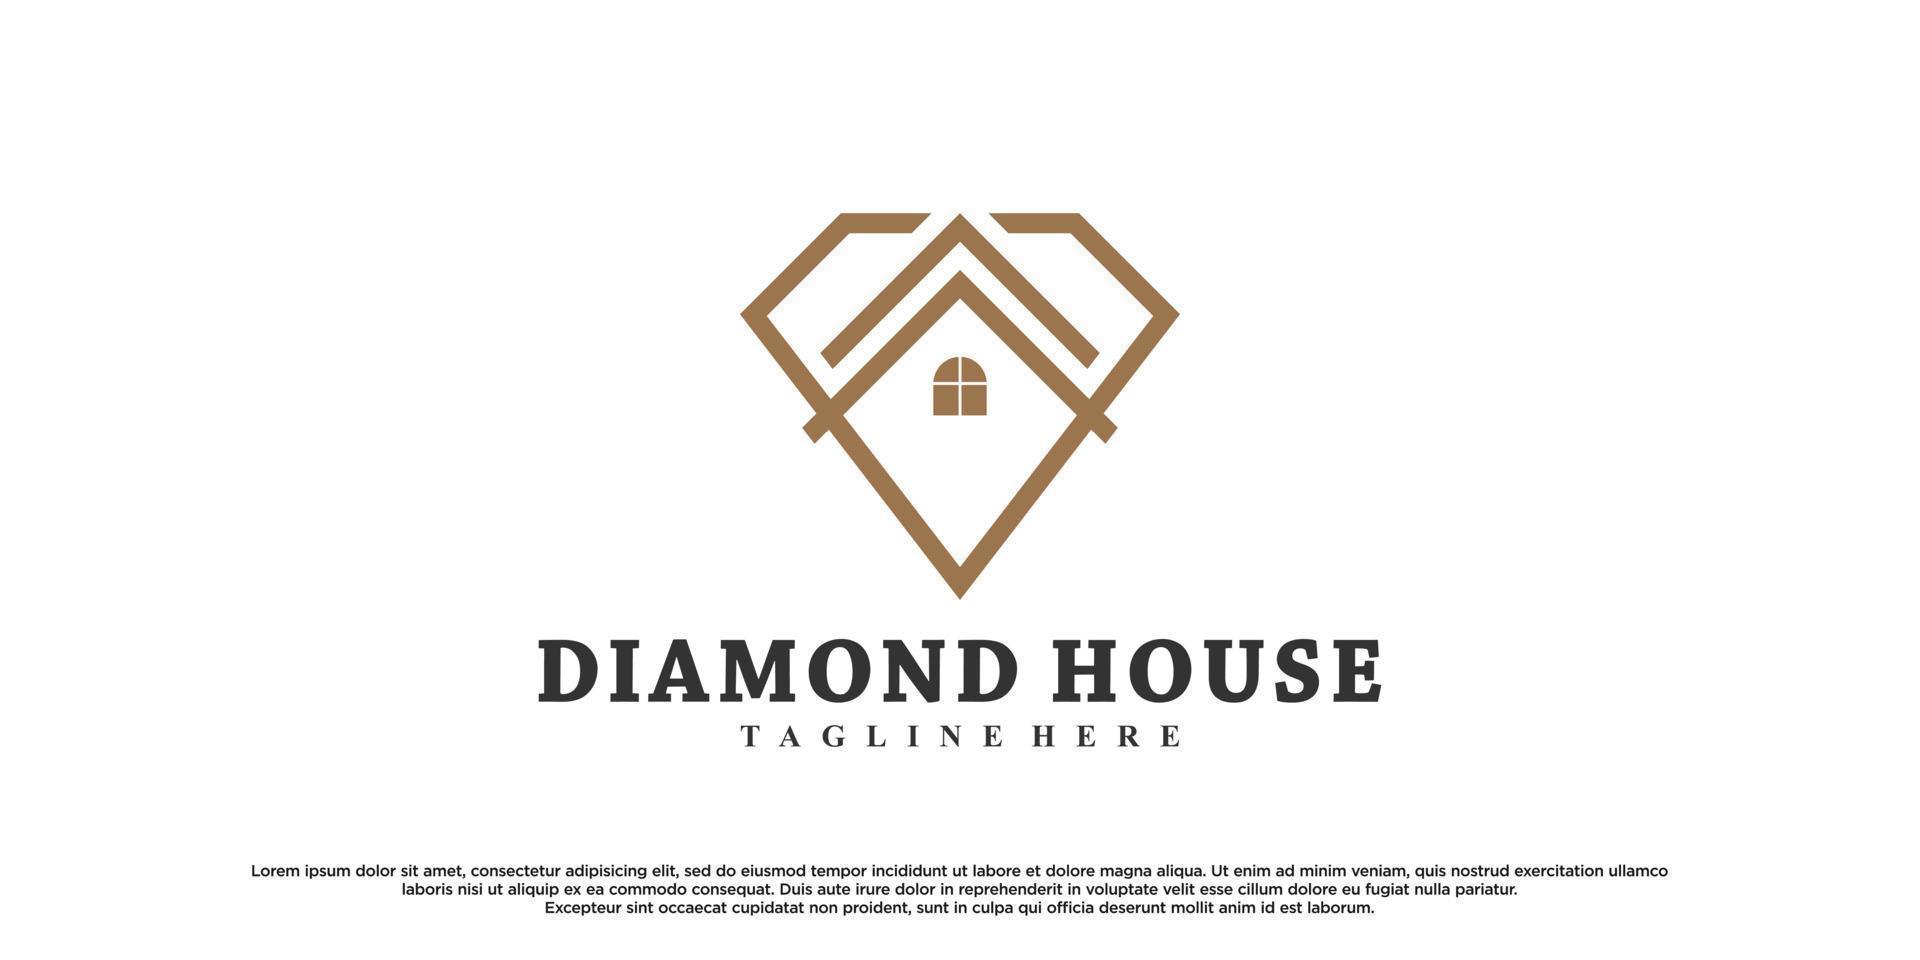 Diamond house logo design with creative concept Premium Vector